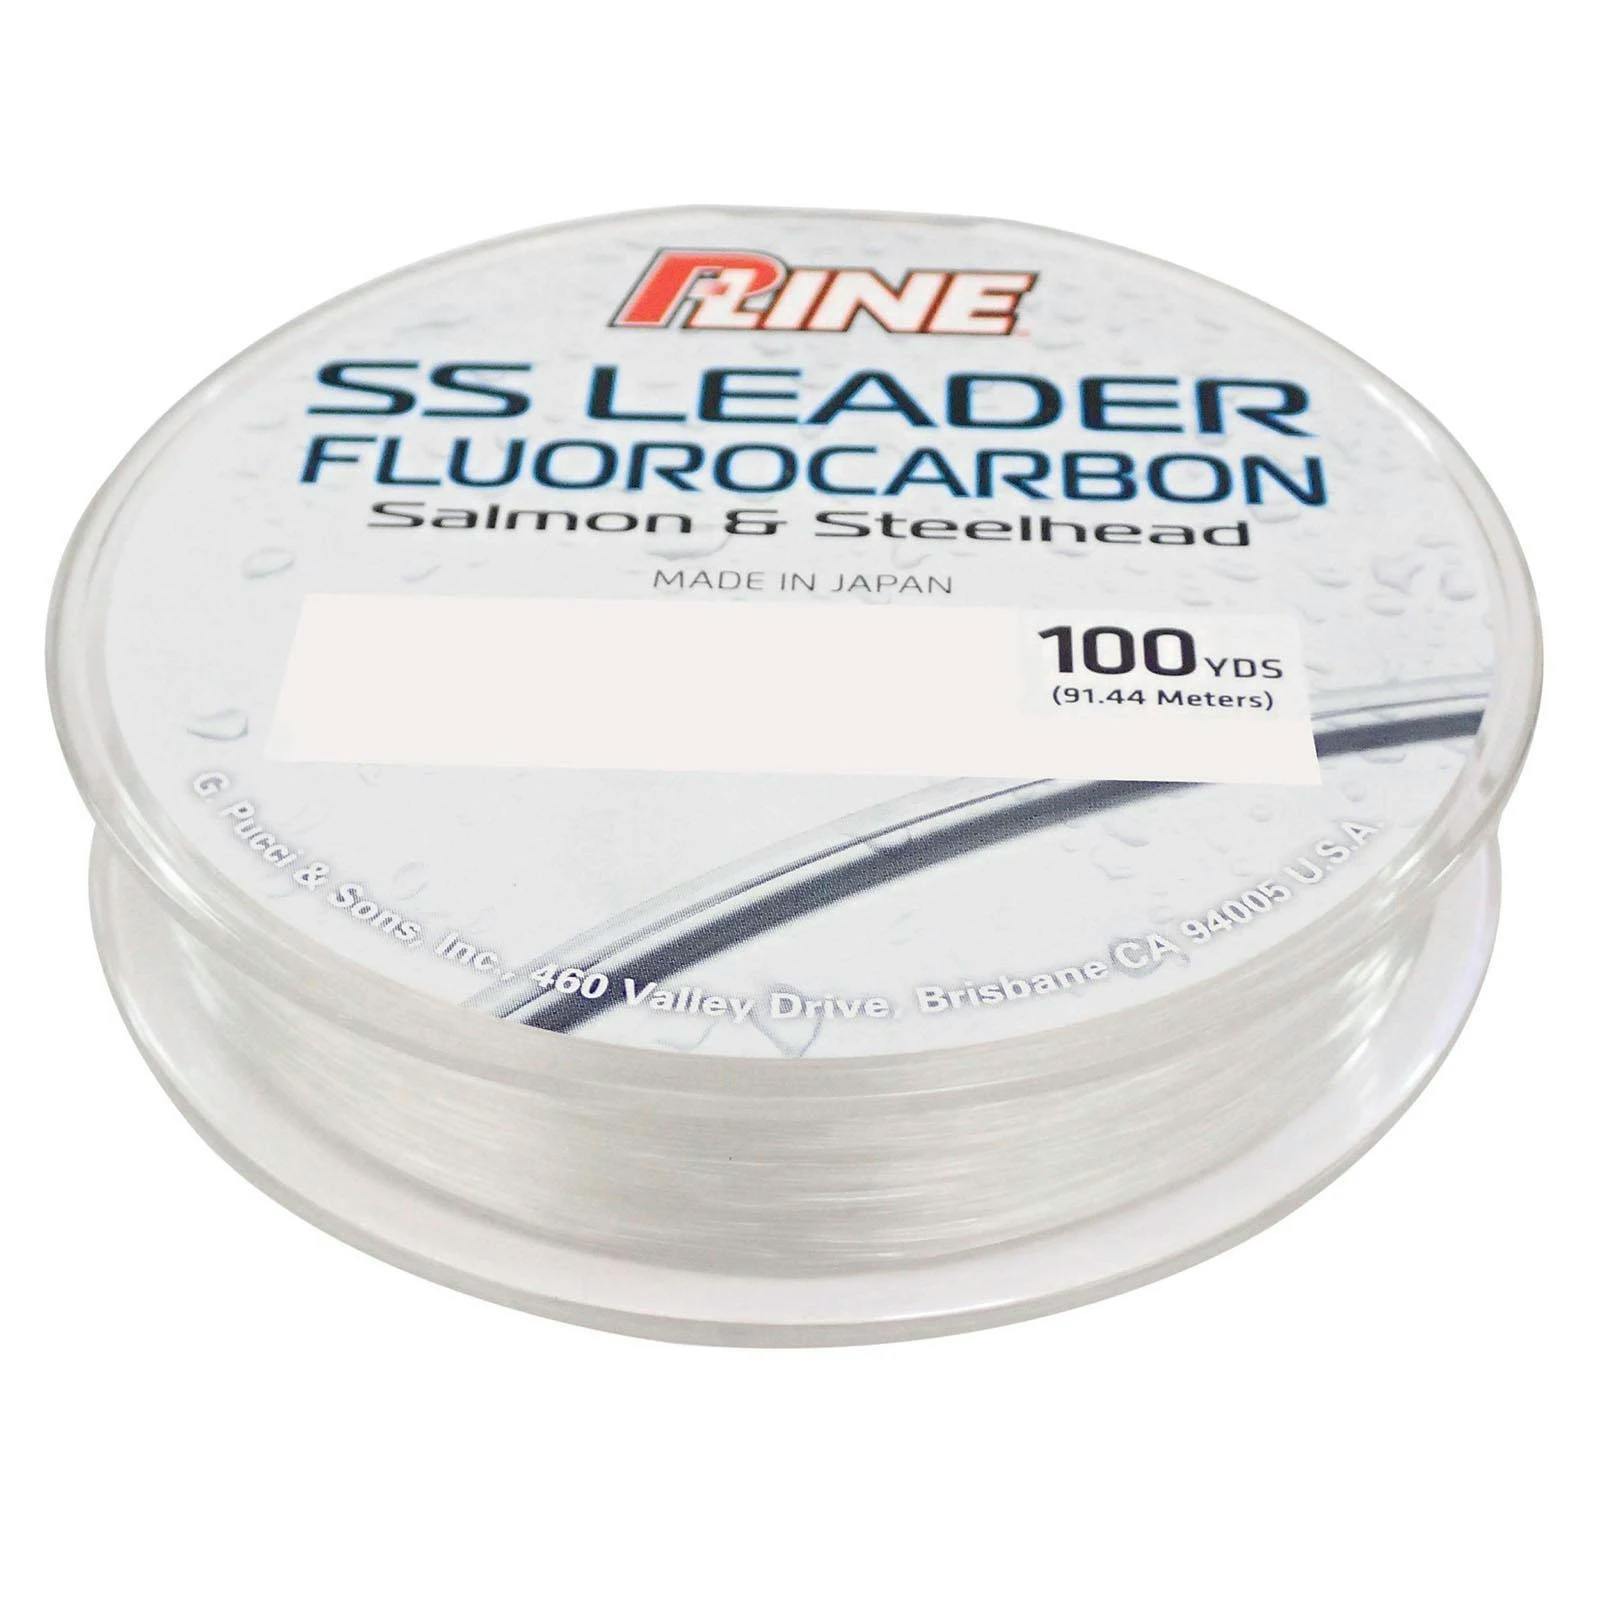 P-Line Salmon/Steelhead Fluorocarbon Leader 100 Yards 40 pound